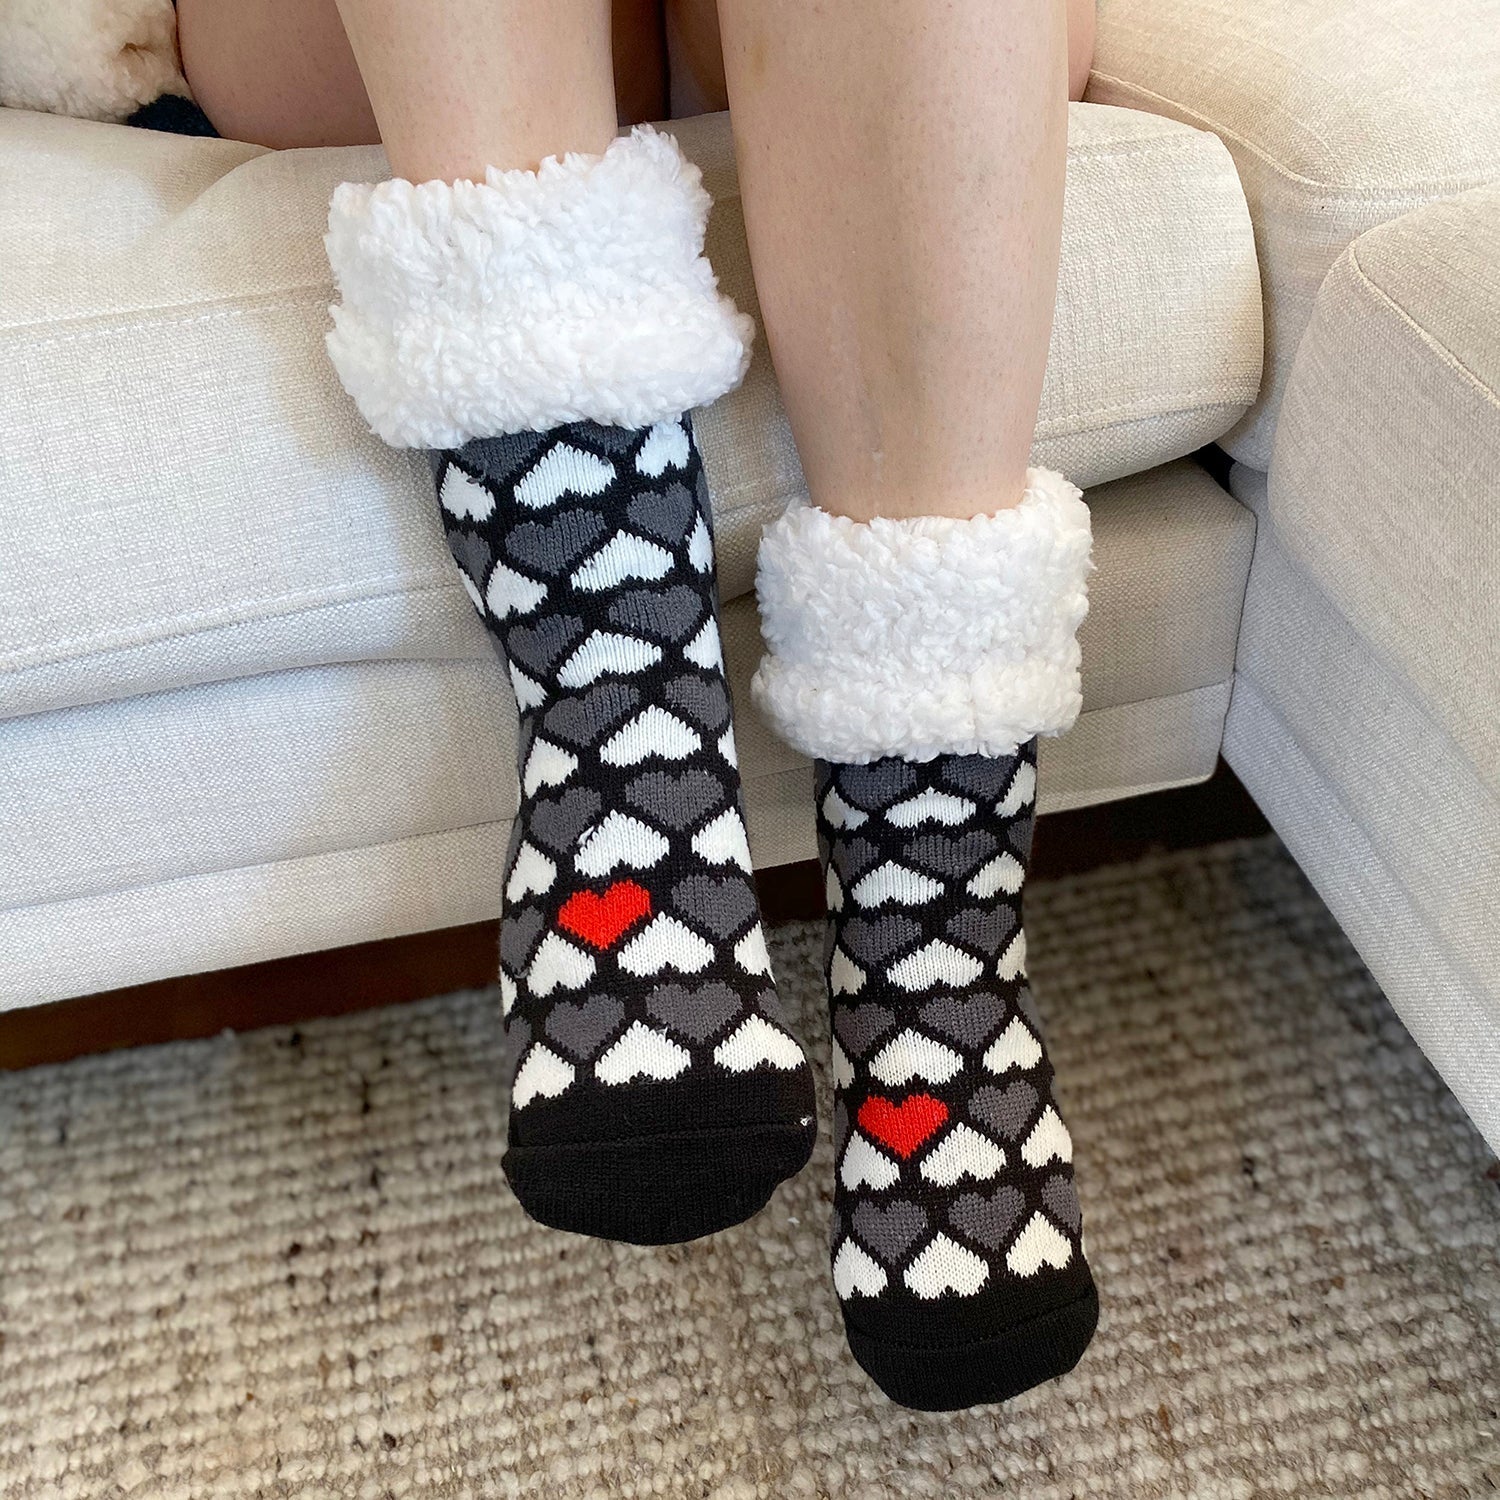 Pudus Cozy Winter Slipper Socks for Women and Men with Non-Slip Grippers and Faux Fur Sherpa Fleece - Adult Regular Fuzzy Socks Heart Black- Classic Slipper Sock